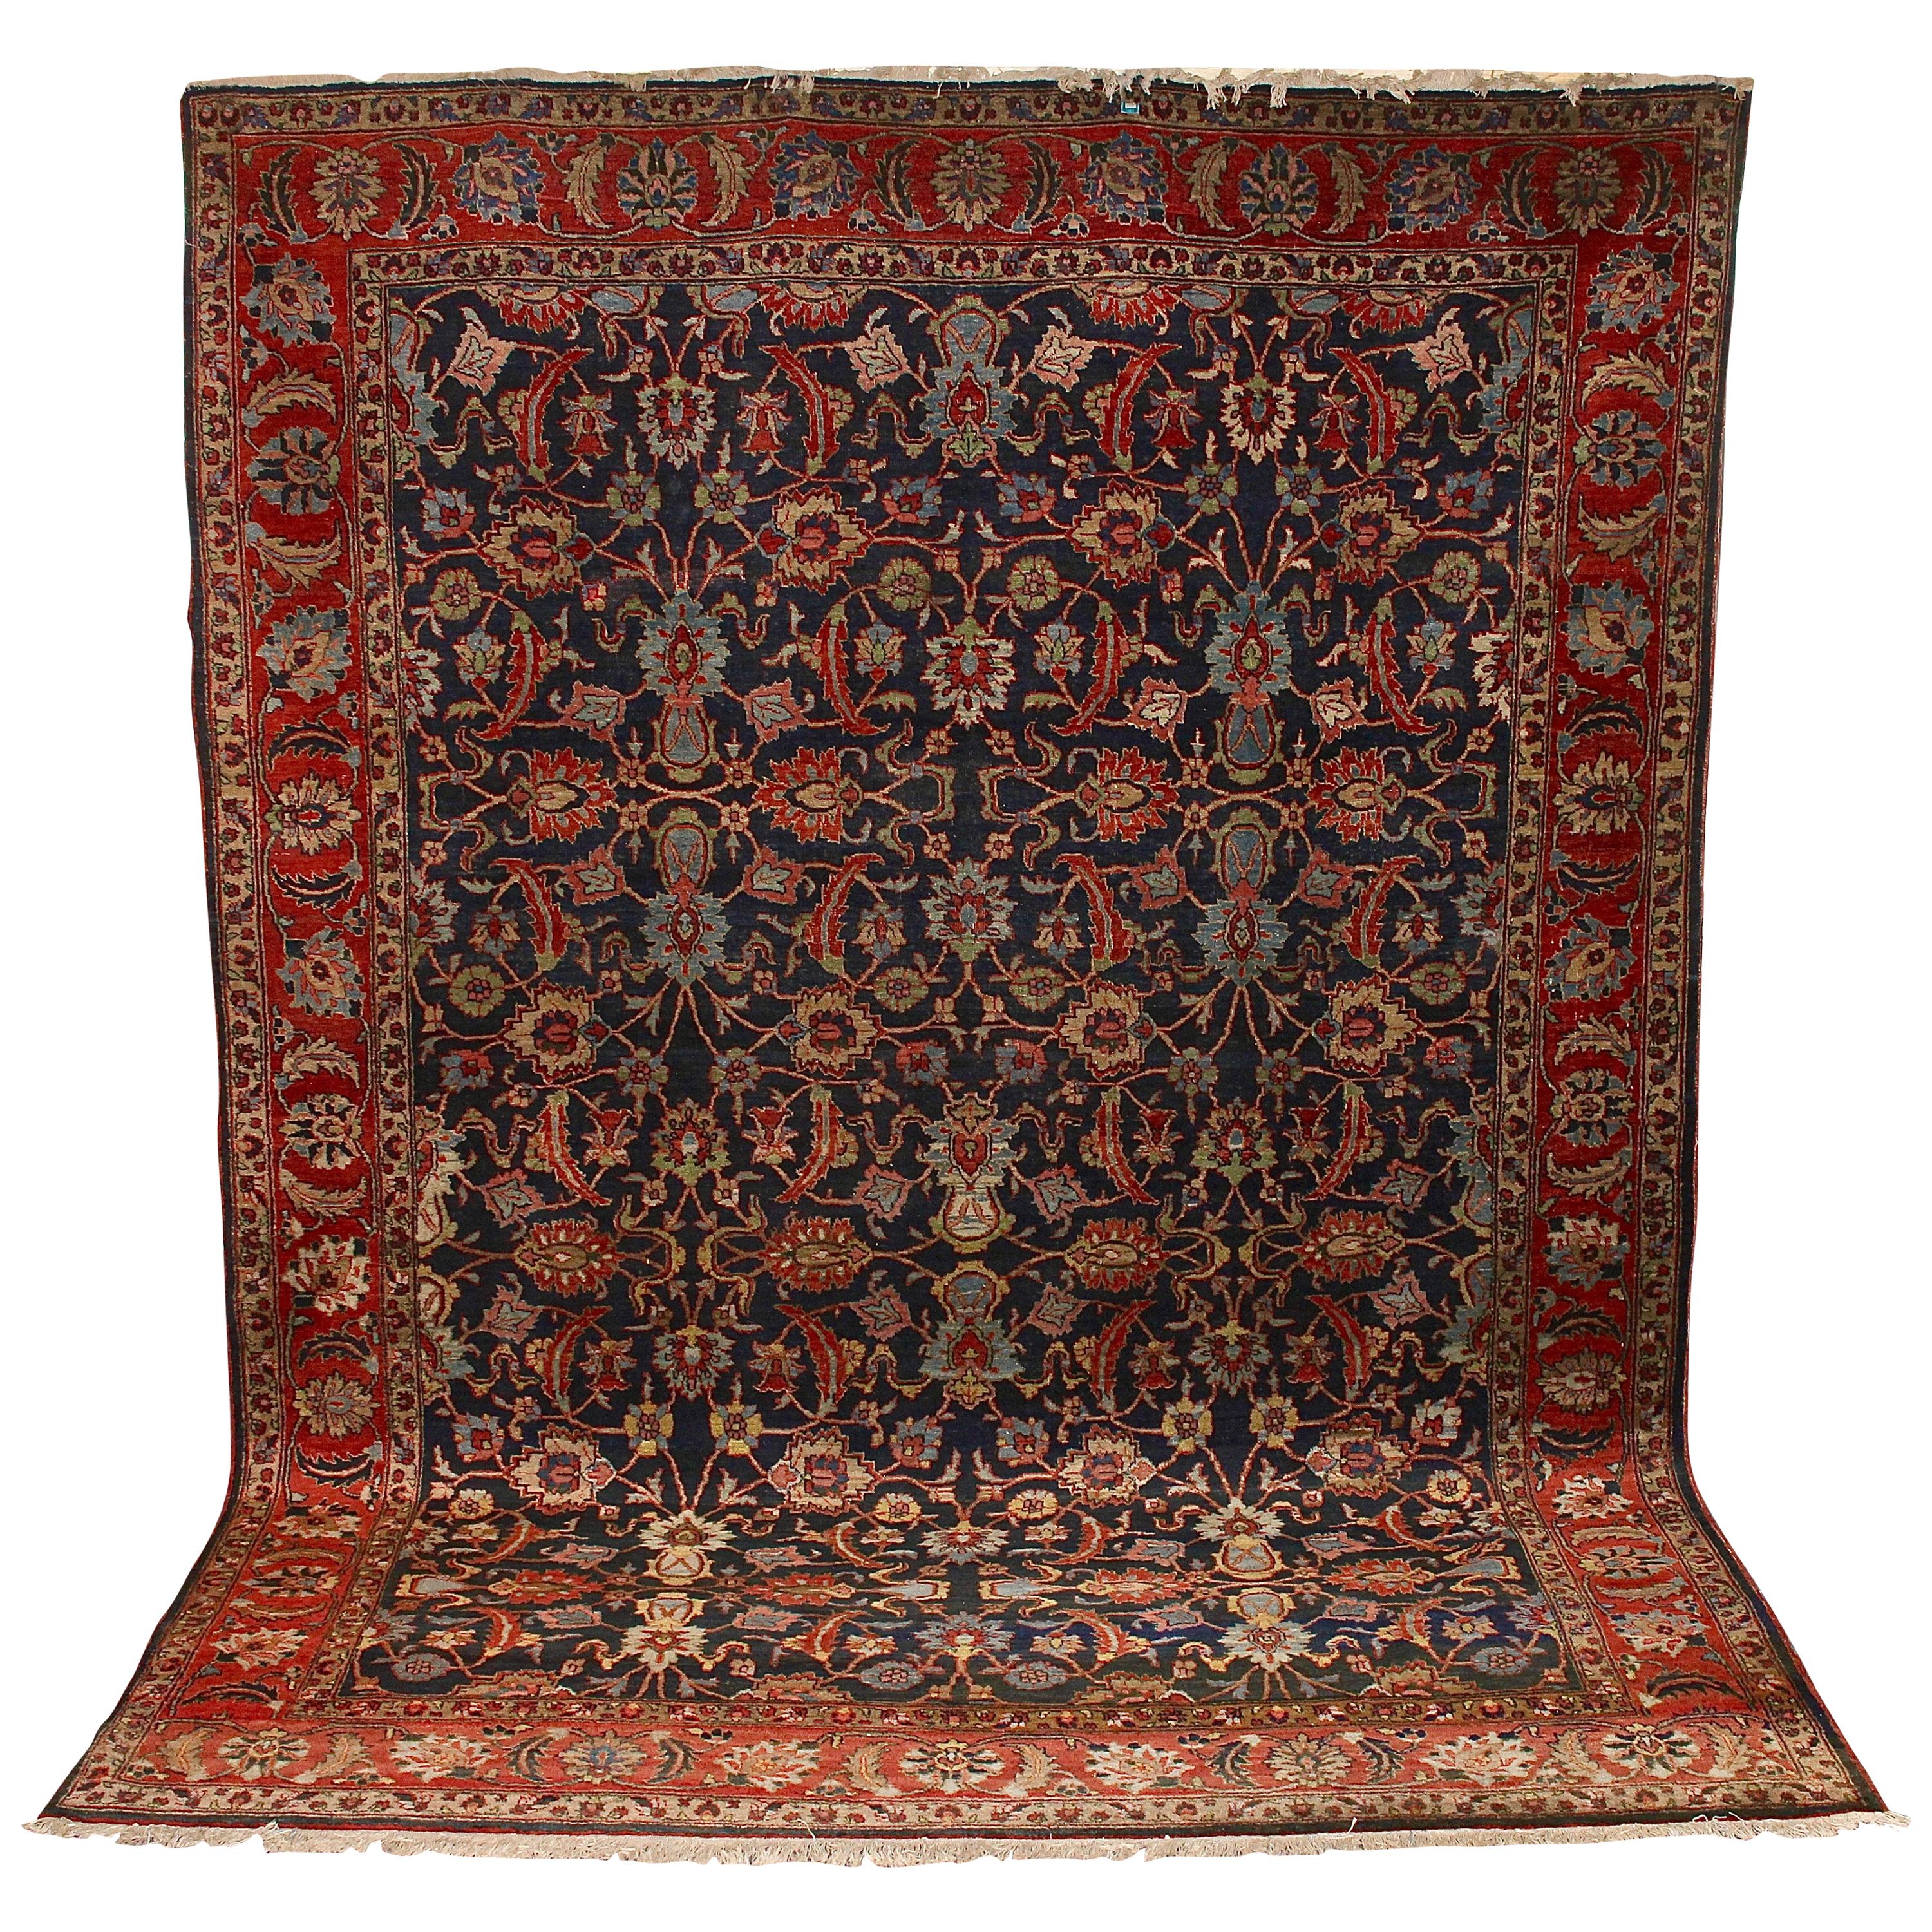 Antique Large, Fine Orient Rug, Carpet, Hand Knotted